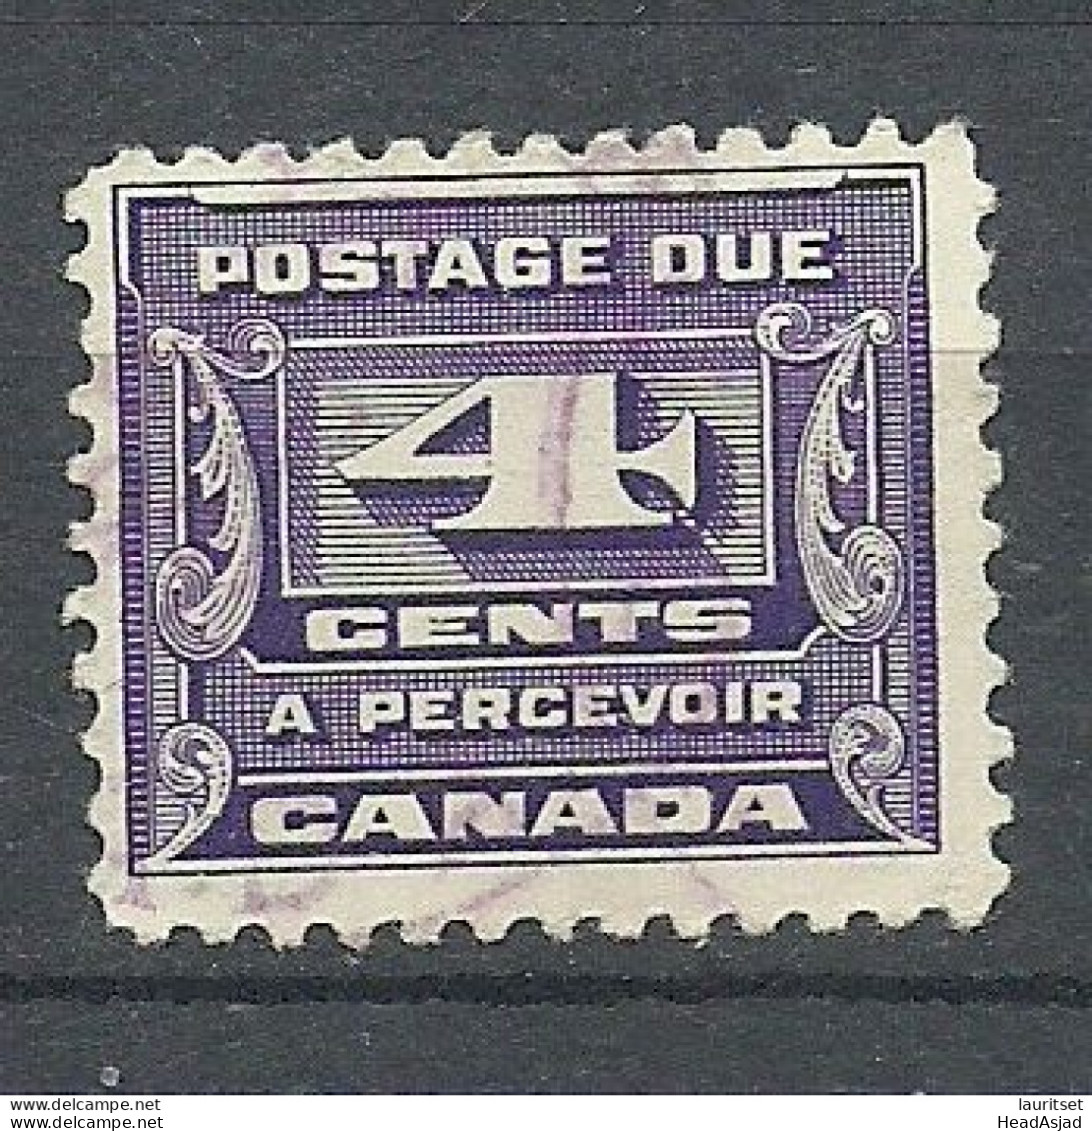 CANADA Kanada 1933 Michel 13 O Postage Due Portomarke A Percevoir - Port Dû (Taxe)